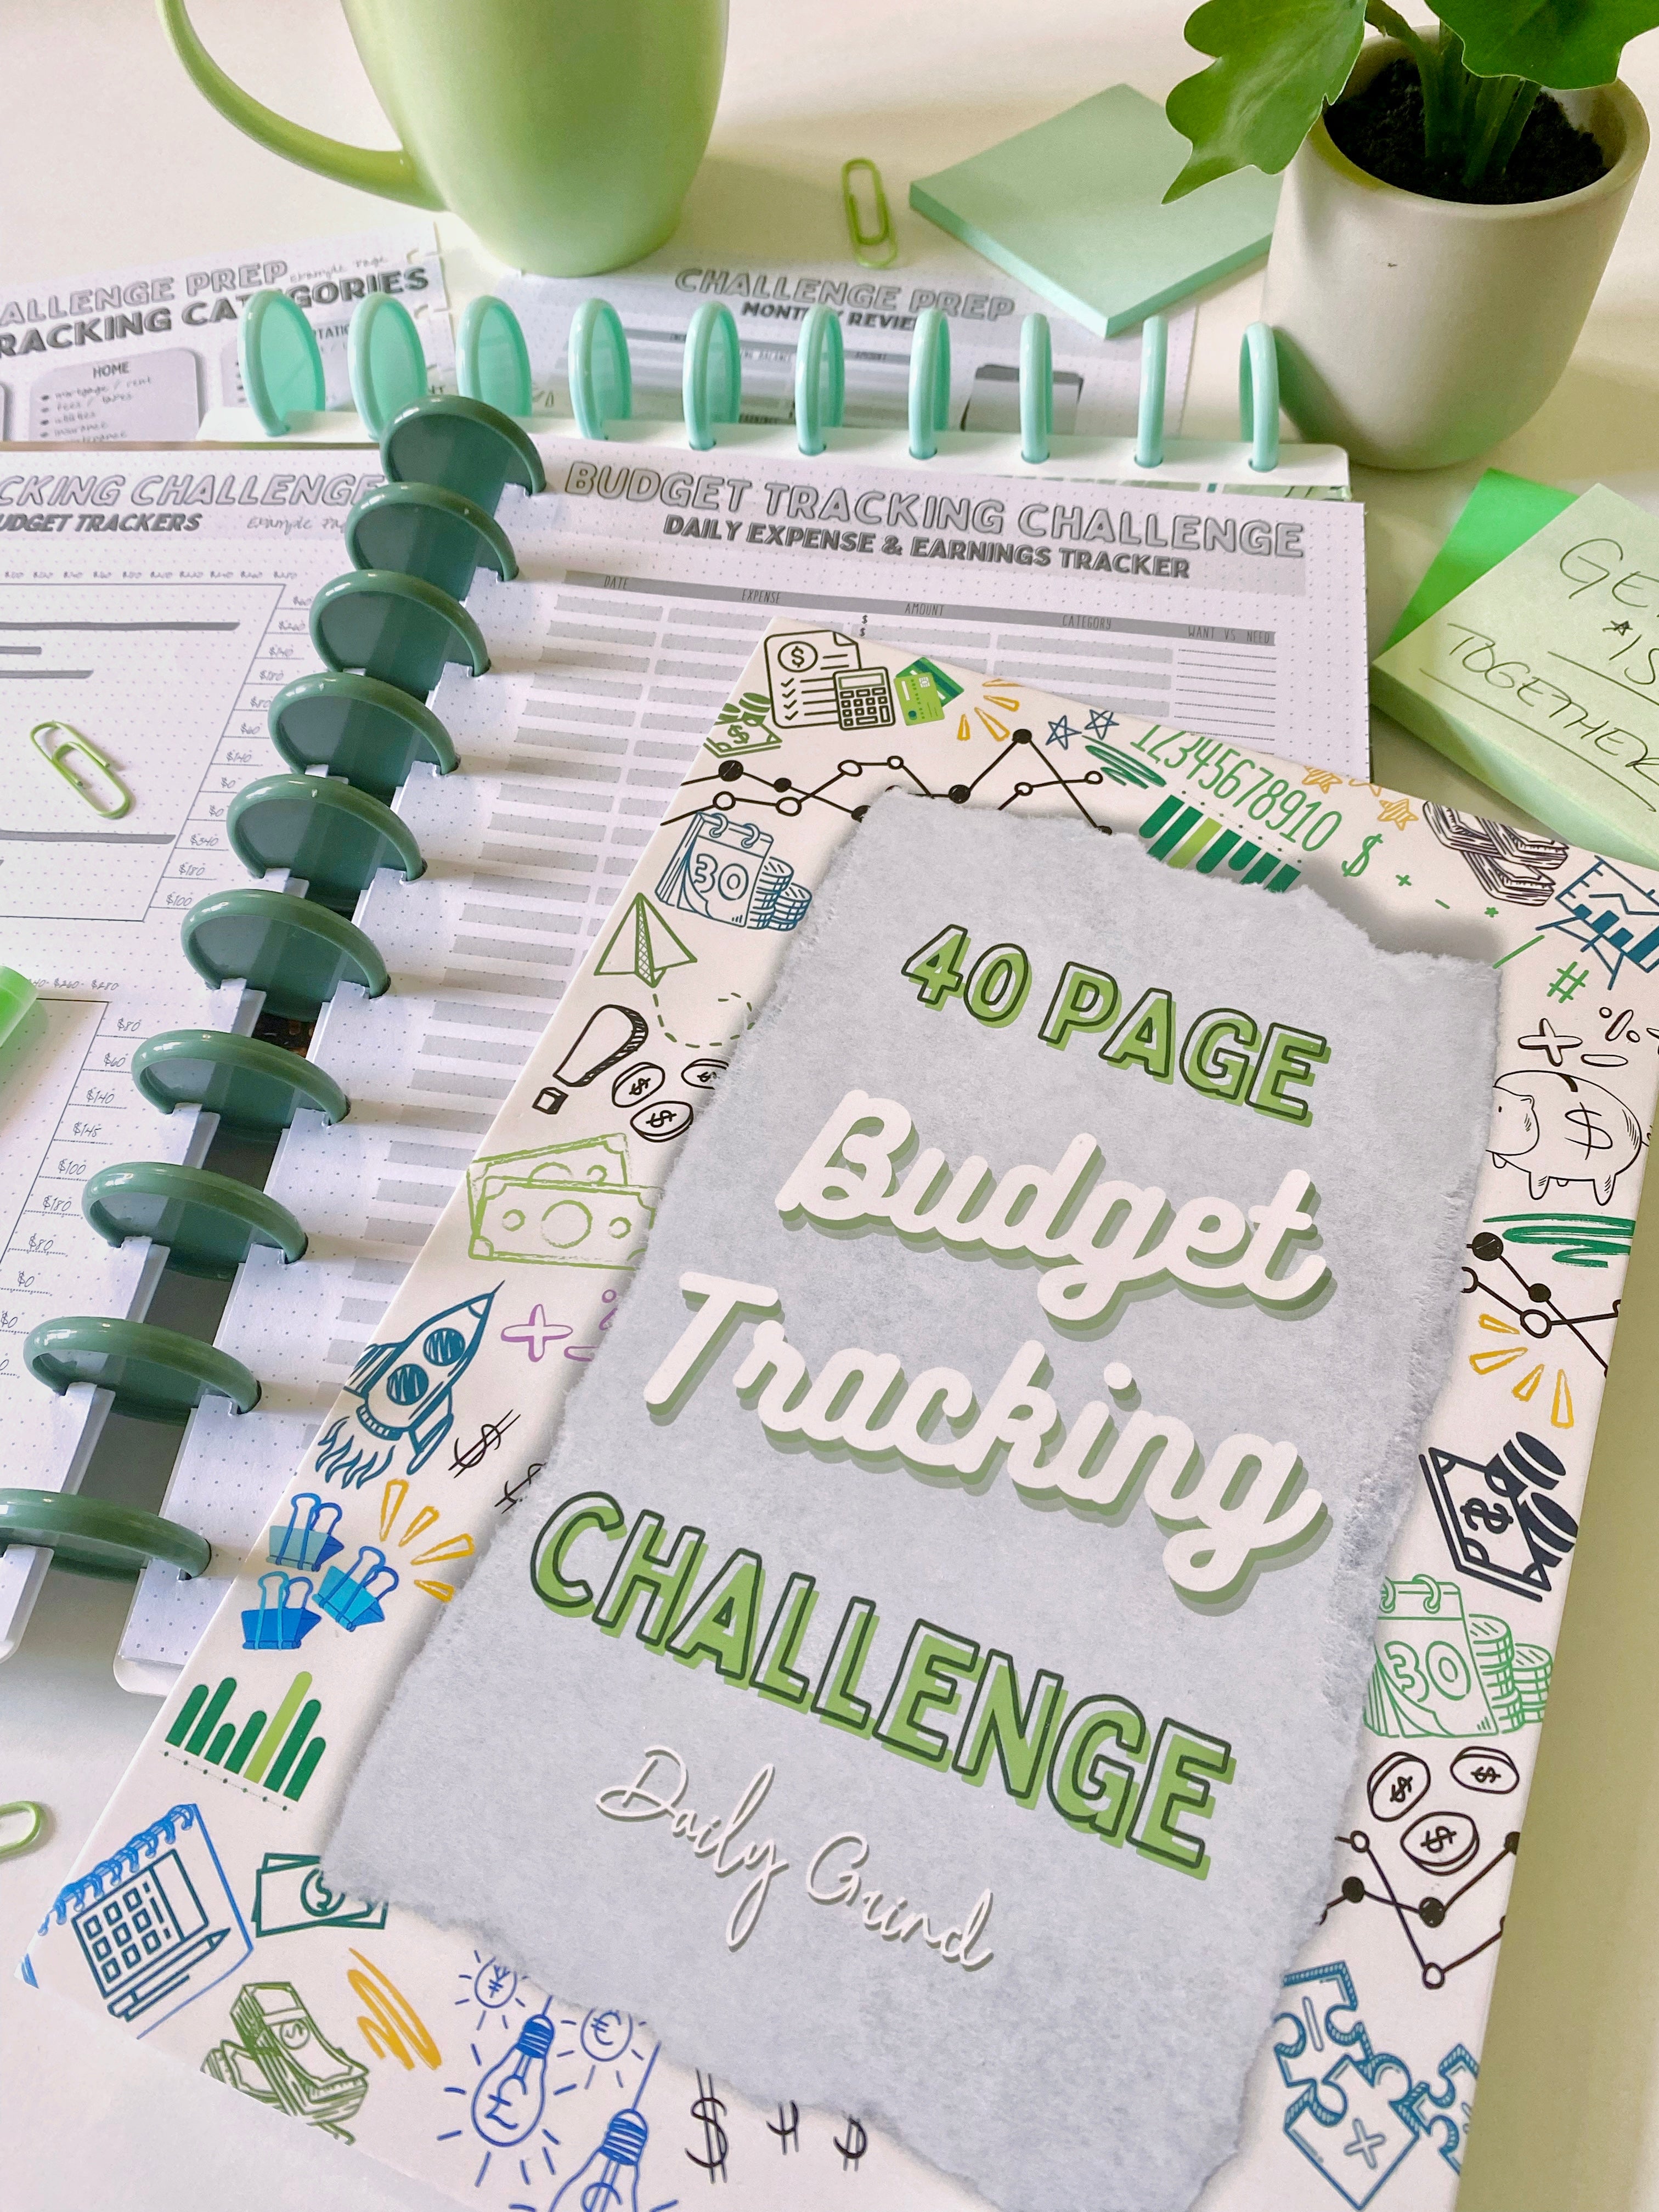 Budget Tracking Challenge - Insert